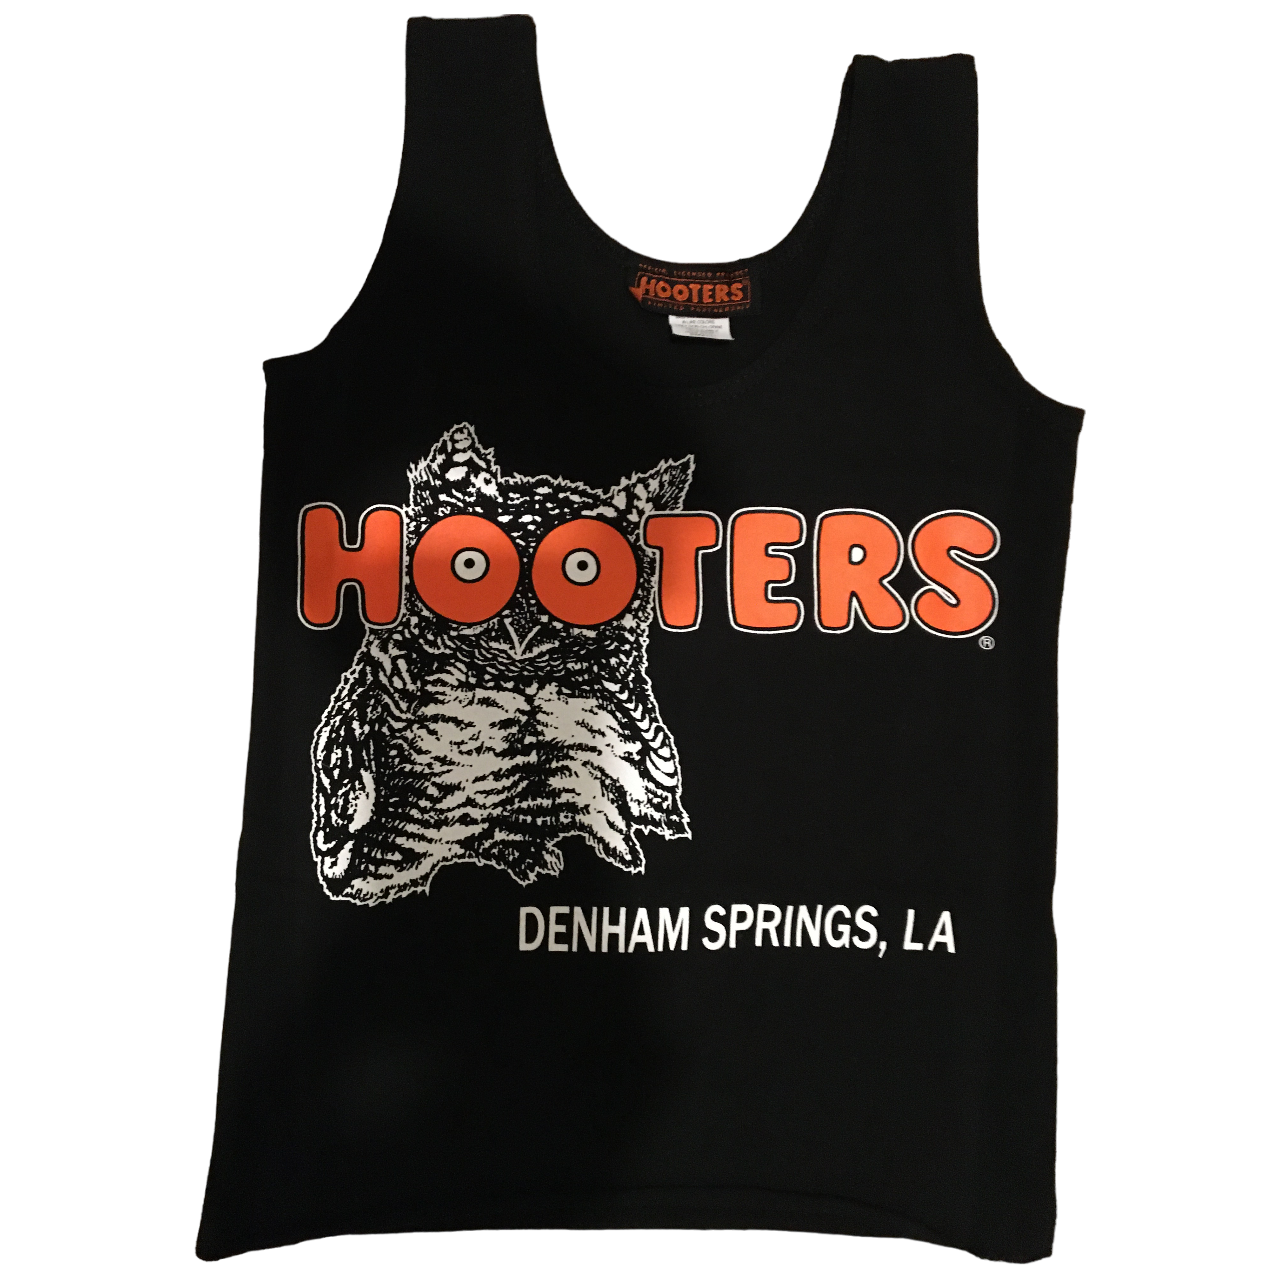 Denham Springs LA New Hooters Women's Black Tank Top Small